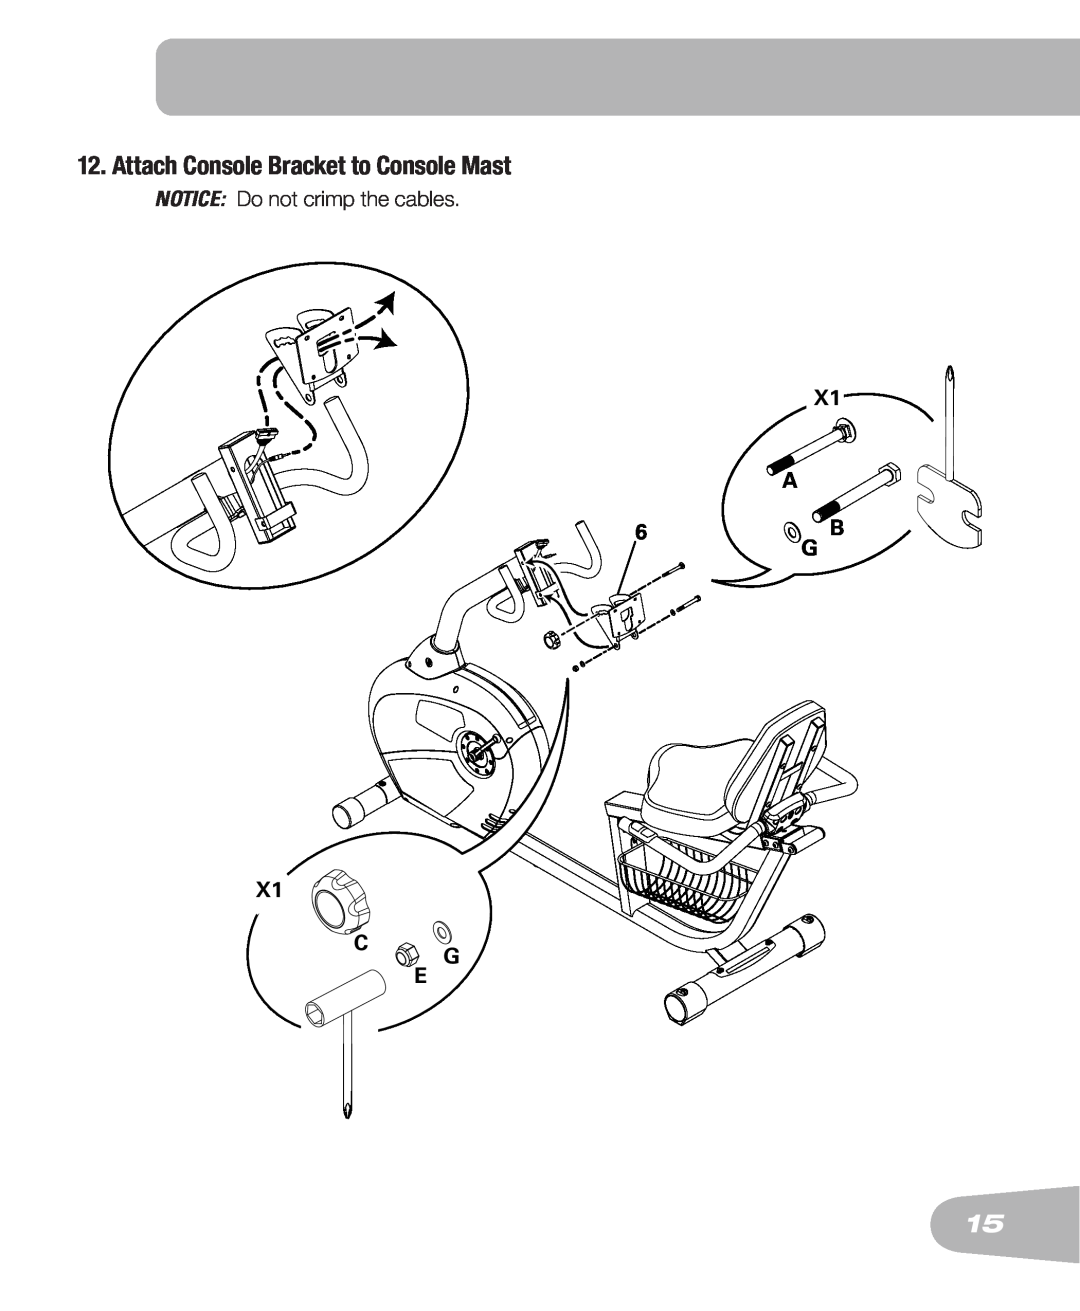 Schwinn 250 schwinn manual Attach Console Bracket to Console Mast, NOTICE Do not crimp the cables 